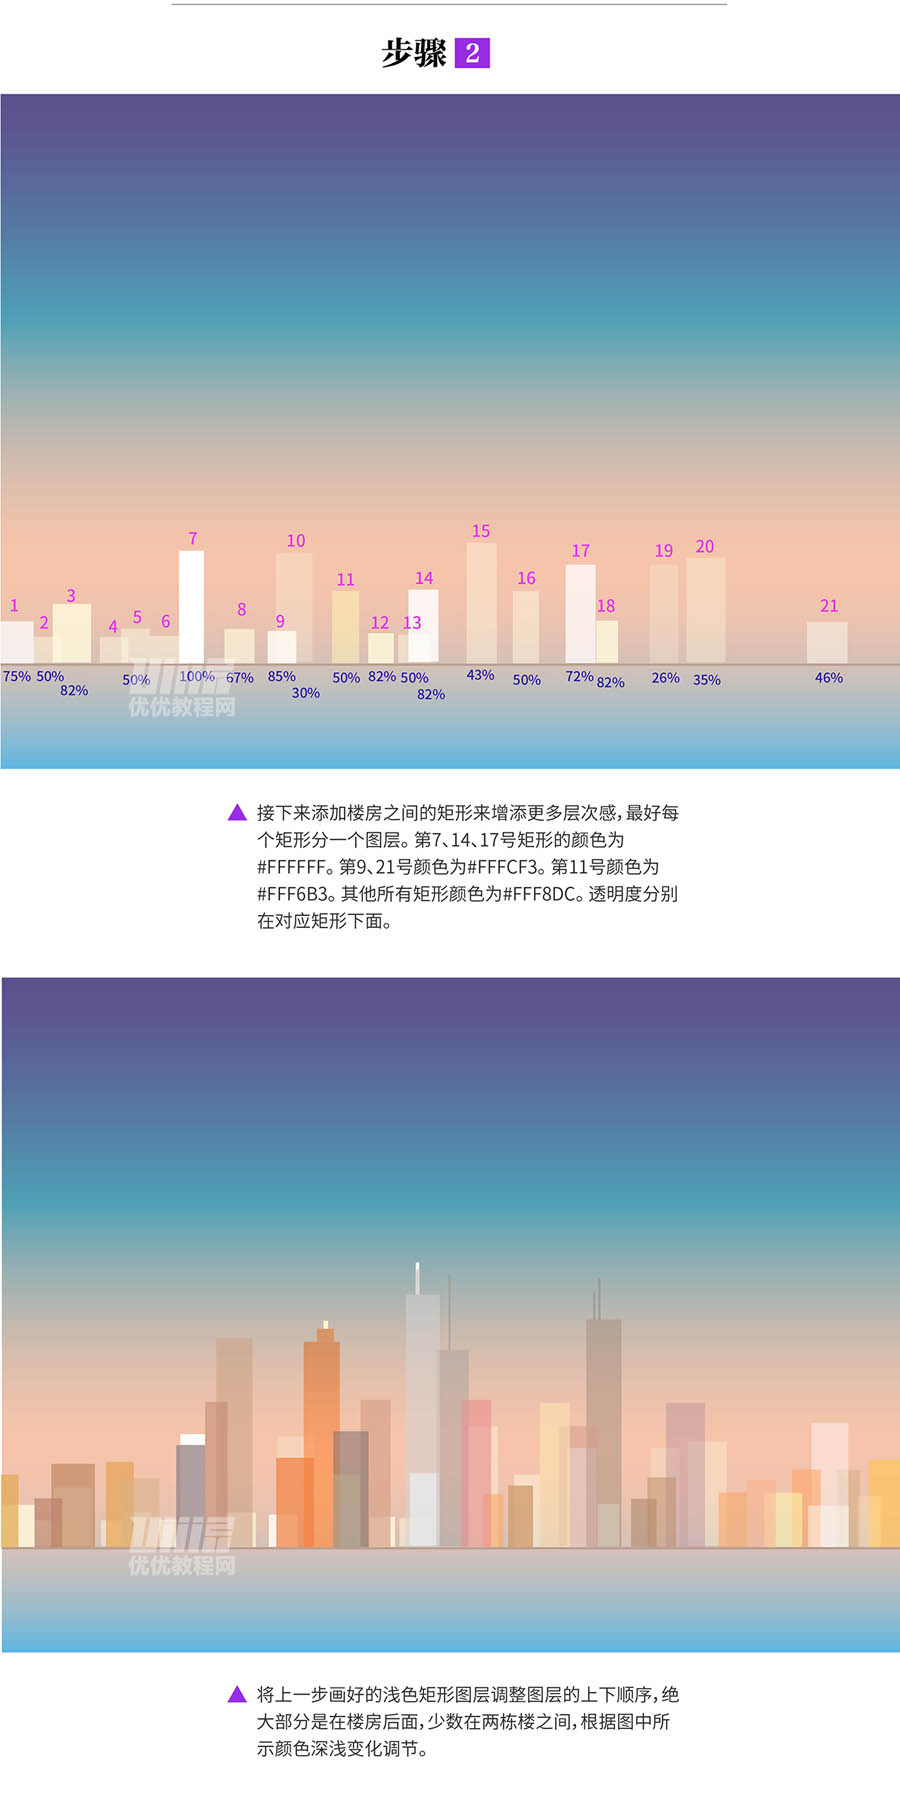 Photoshop集合AI绘制矢量风格的城市夜景,PS教程,素材中国网